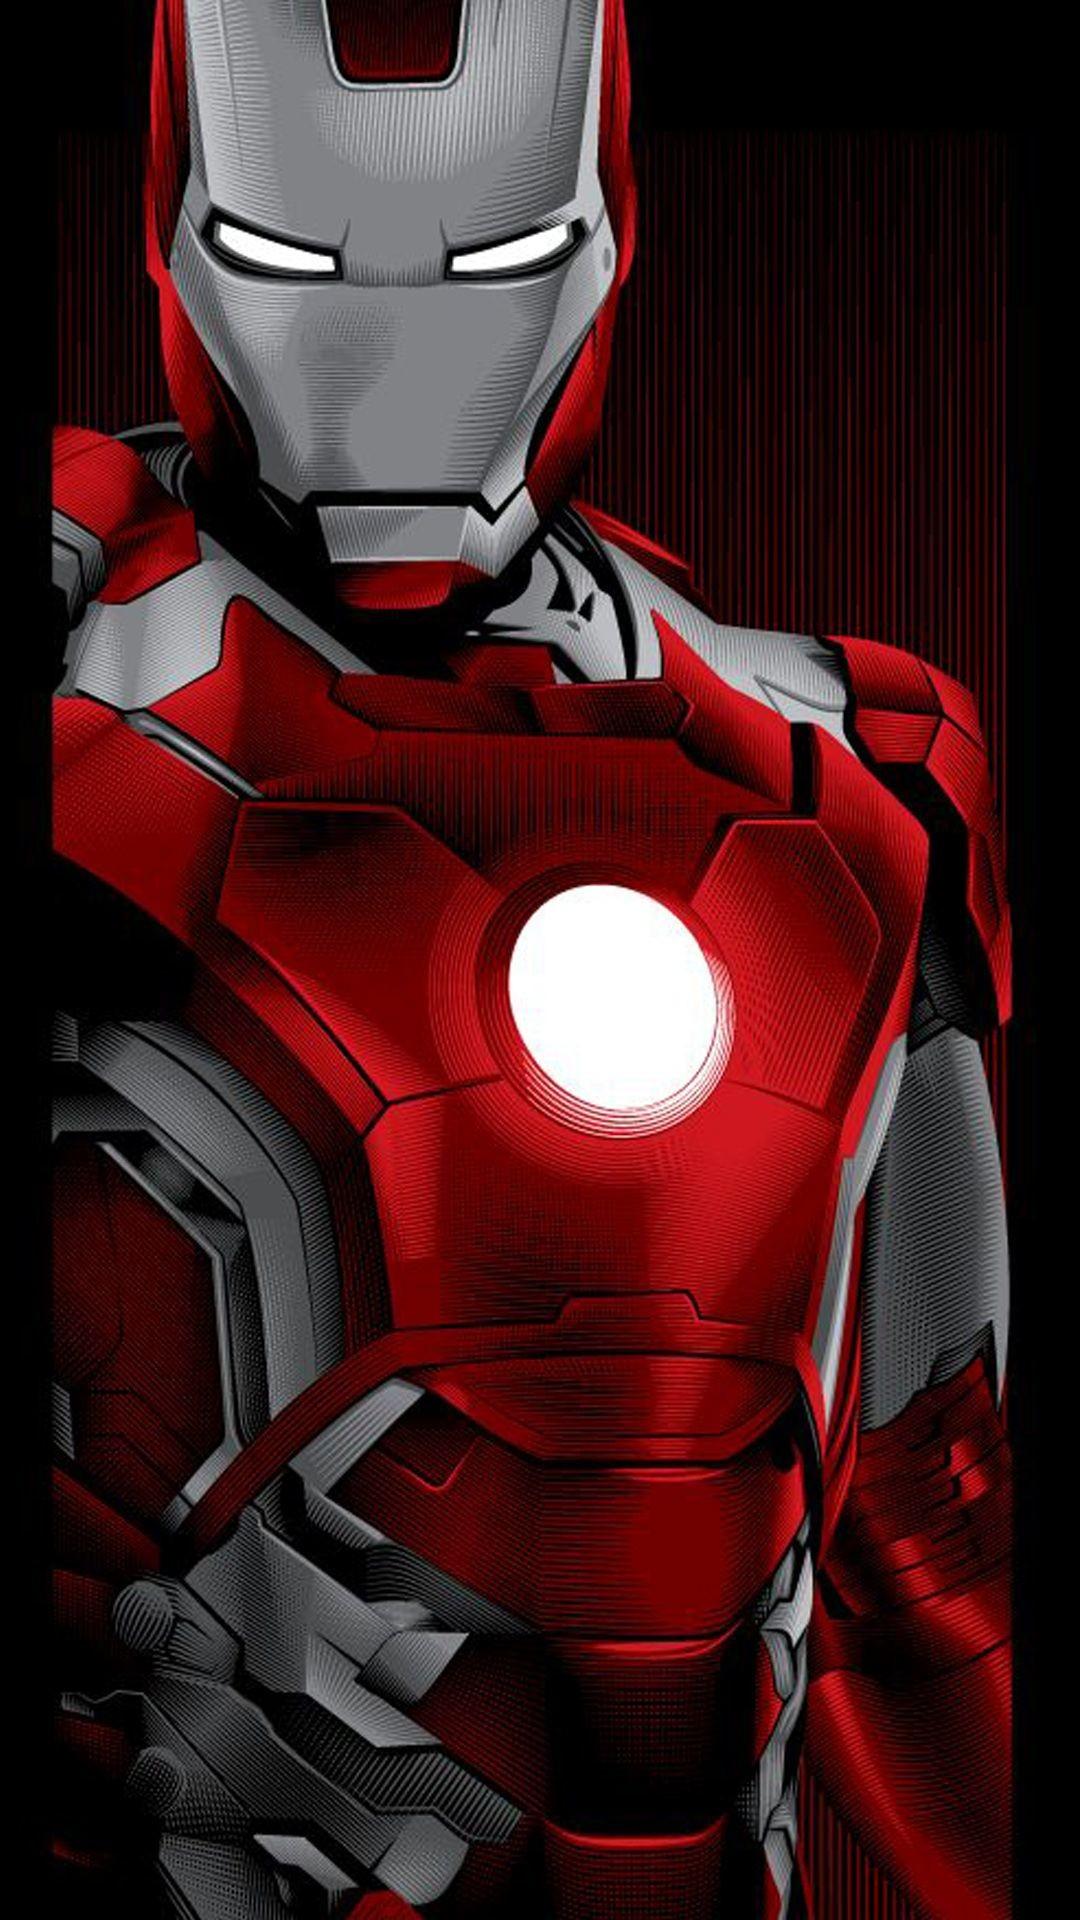 Envogue Kids Wallpaper Marvel Iron Man, 3D Design, Washable, 3ft X 2ft :  Amazon.in: Home Improvement